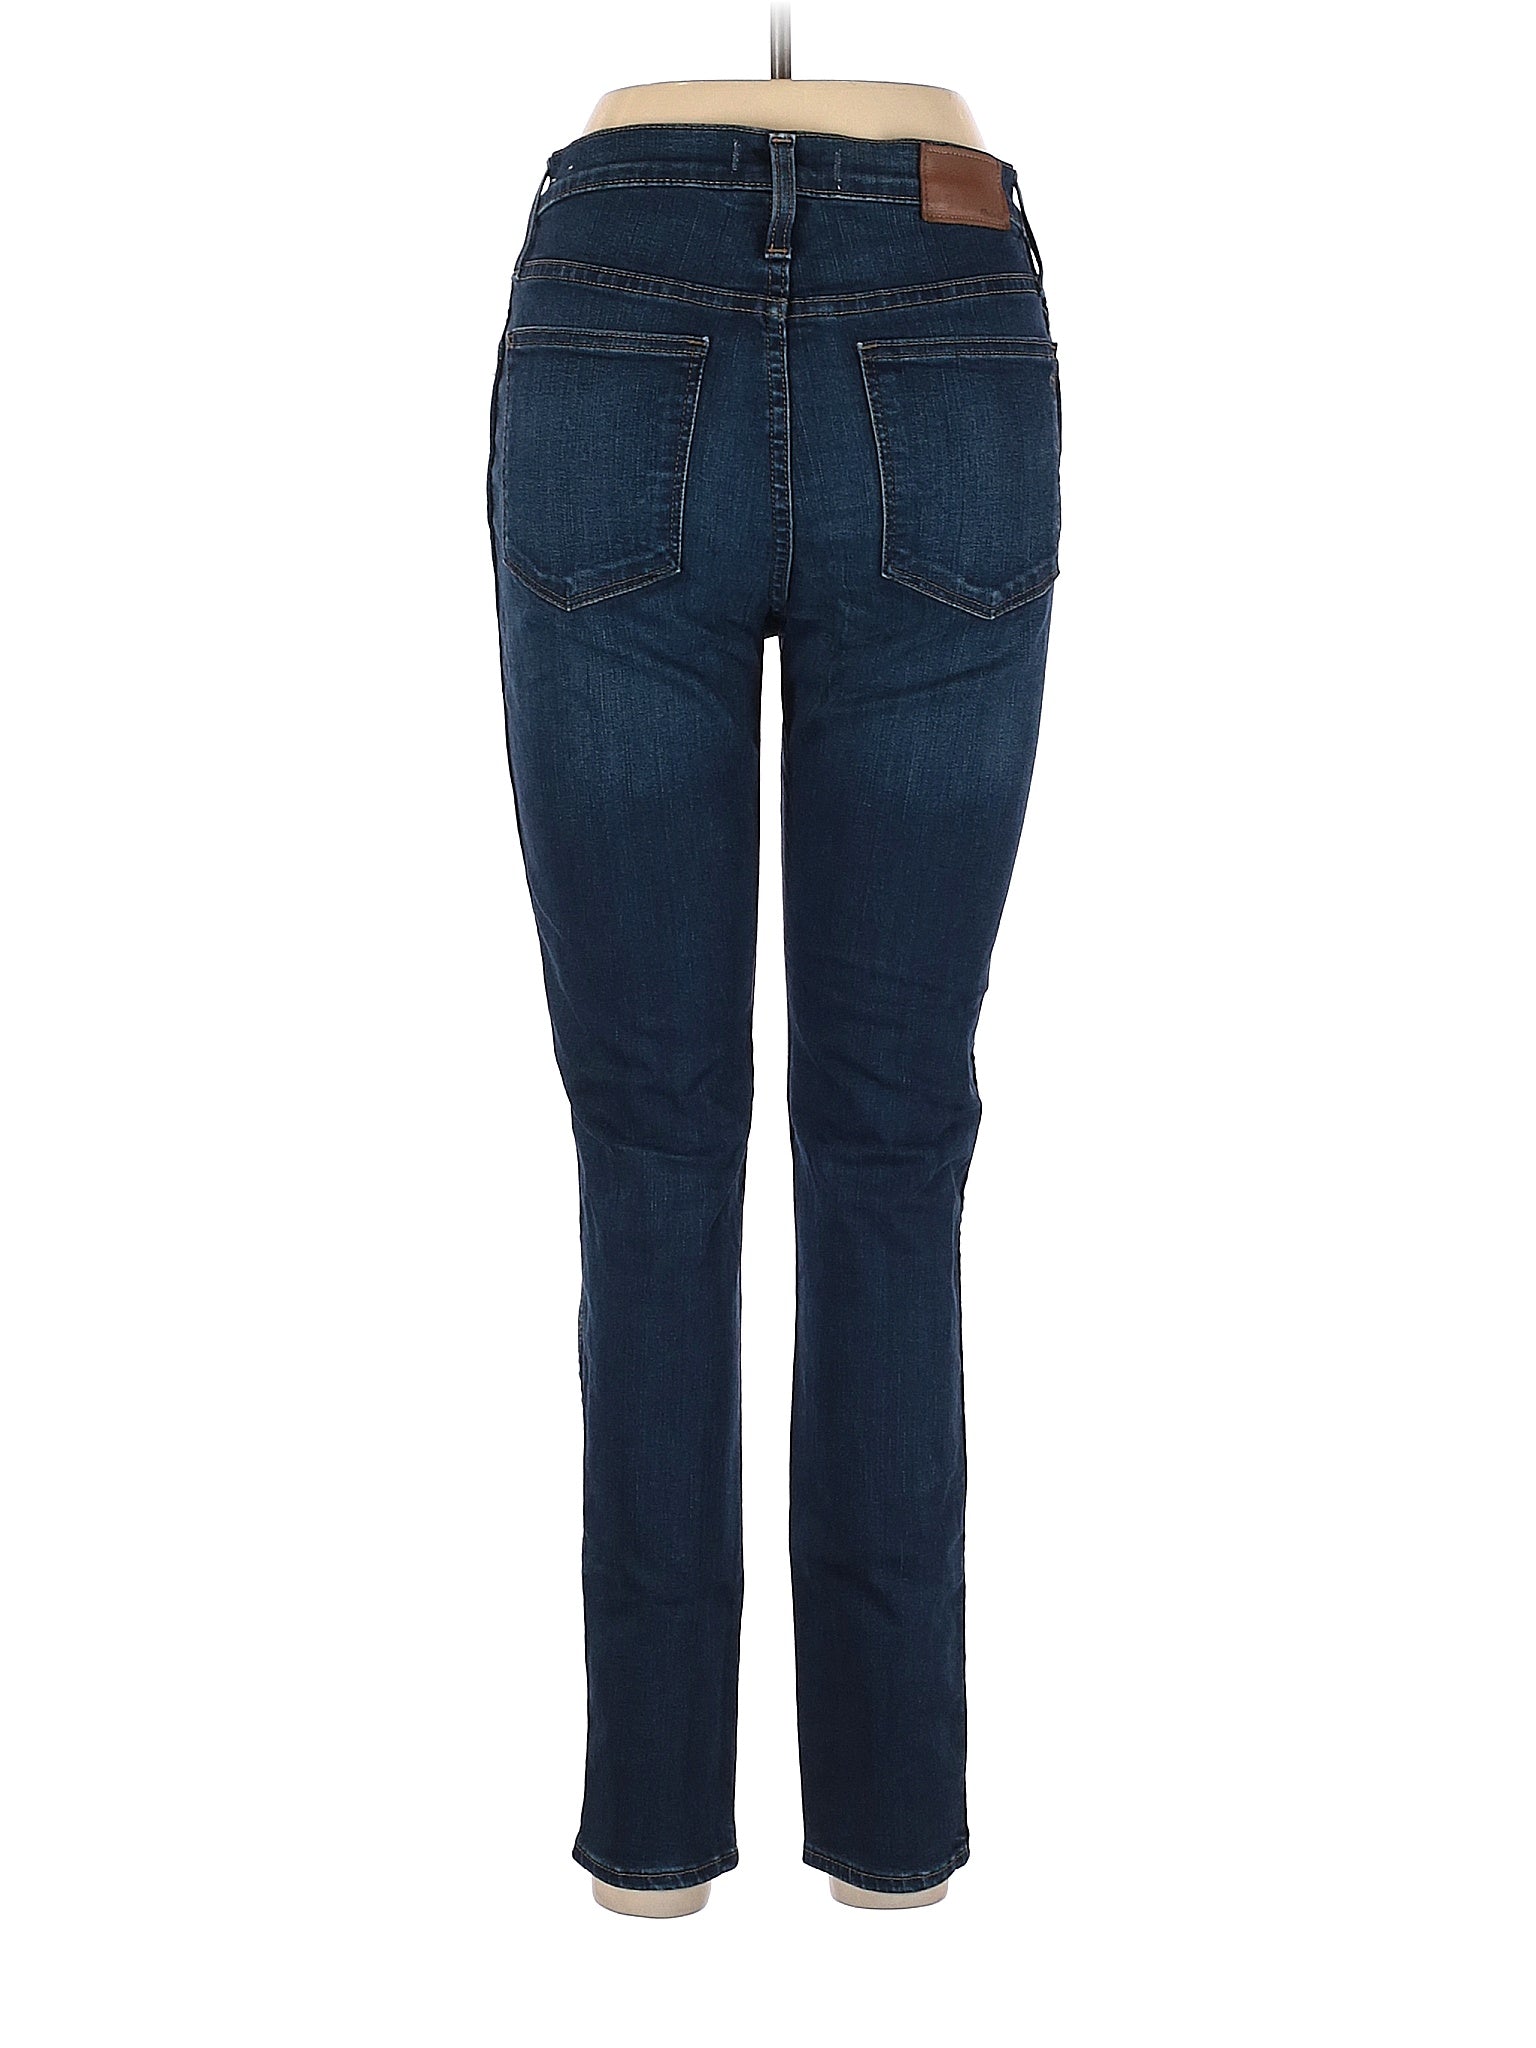 Mid-Rise Skinny Jeans in Dark Wash waist size - 28